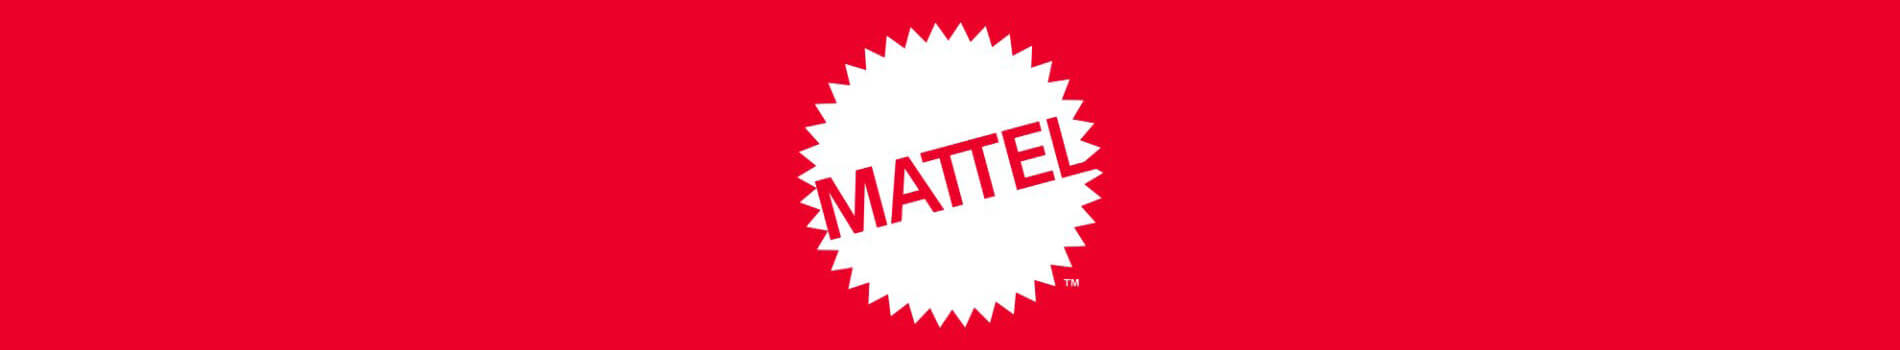 Mattel logo on a red background